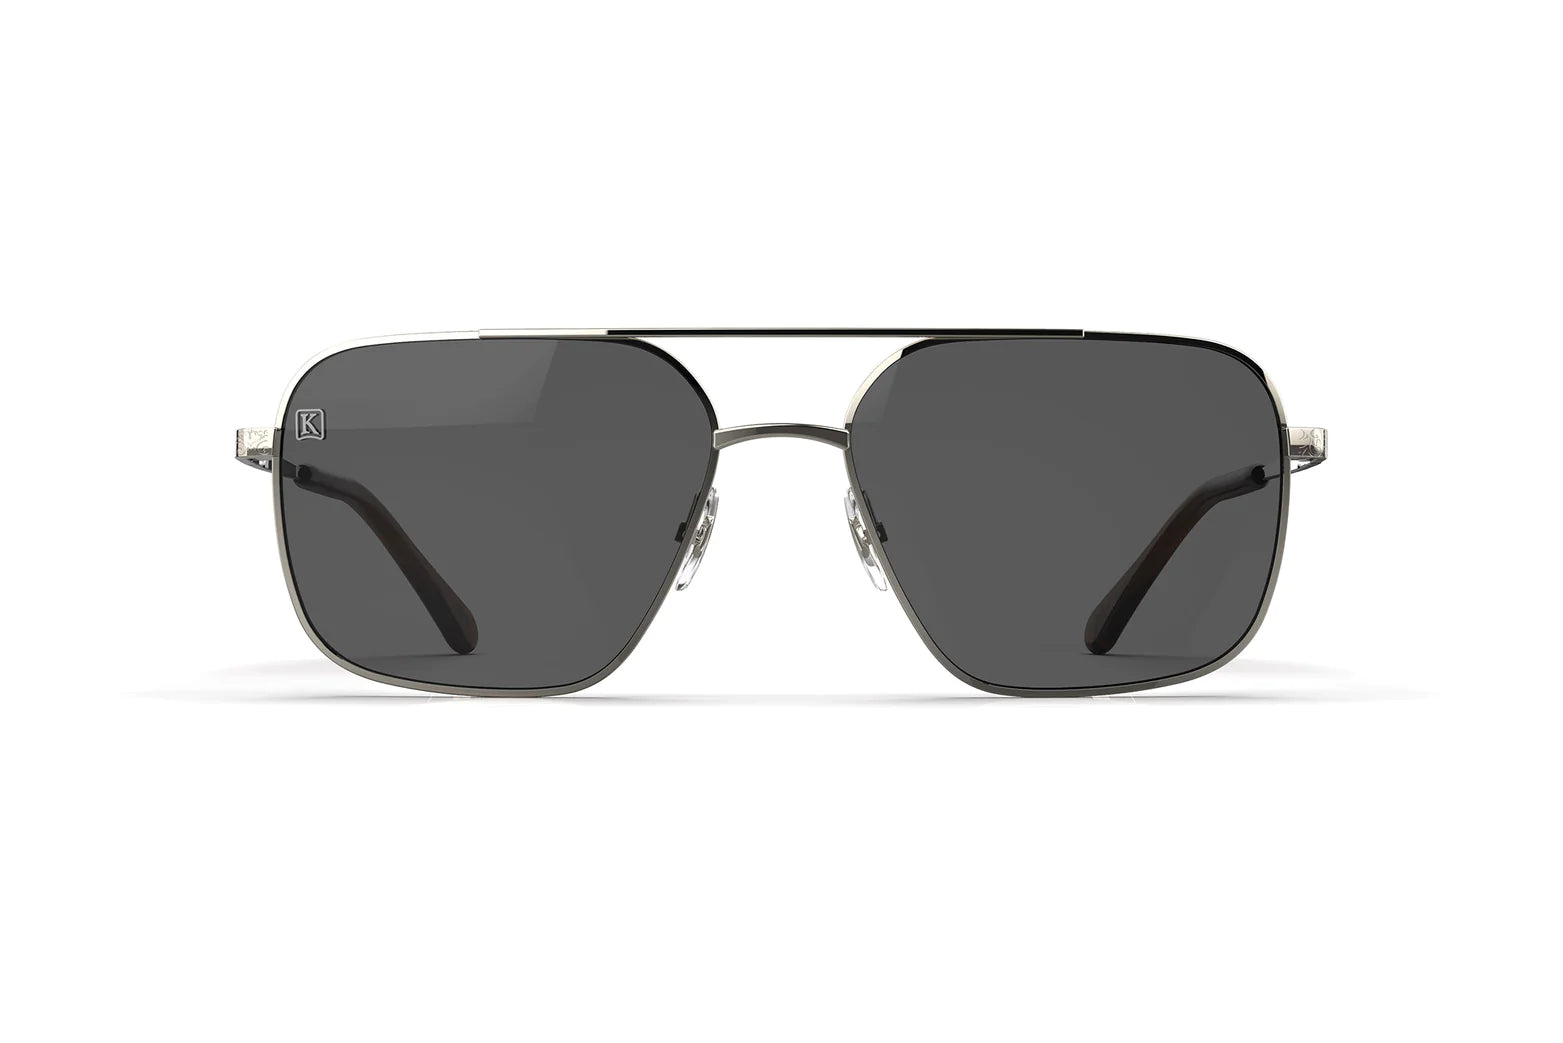 Kroop's Brand Sunglasses - The Houston